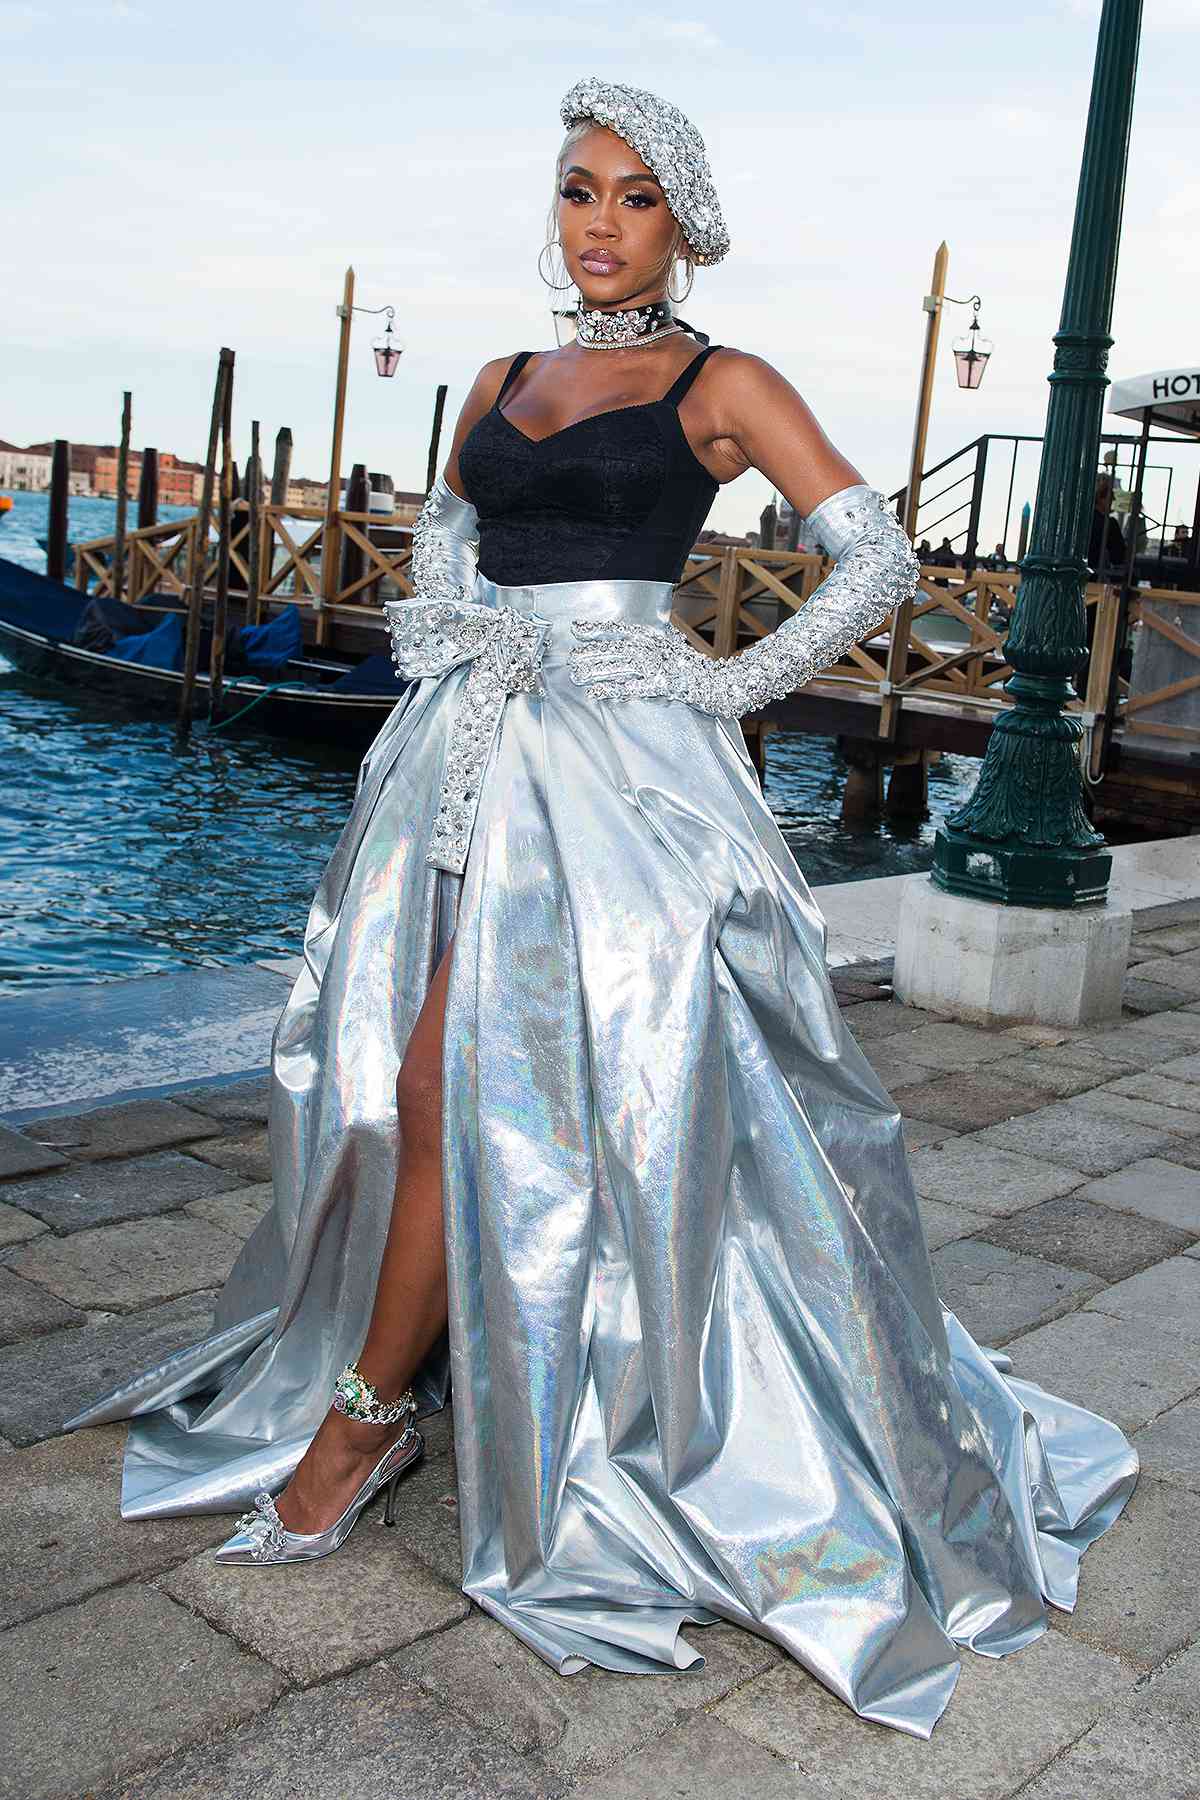 Dolce&Gabbana Alta Moda Women’s Show in Venice, Italy on Sunday August 29th.